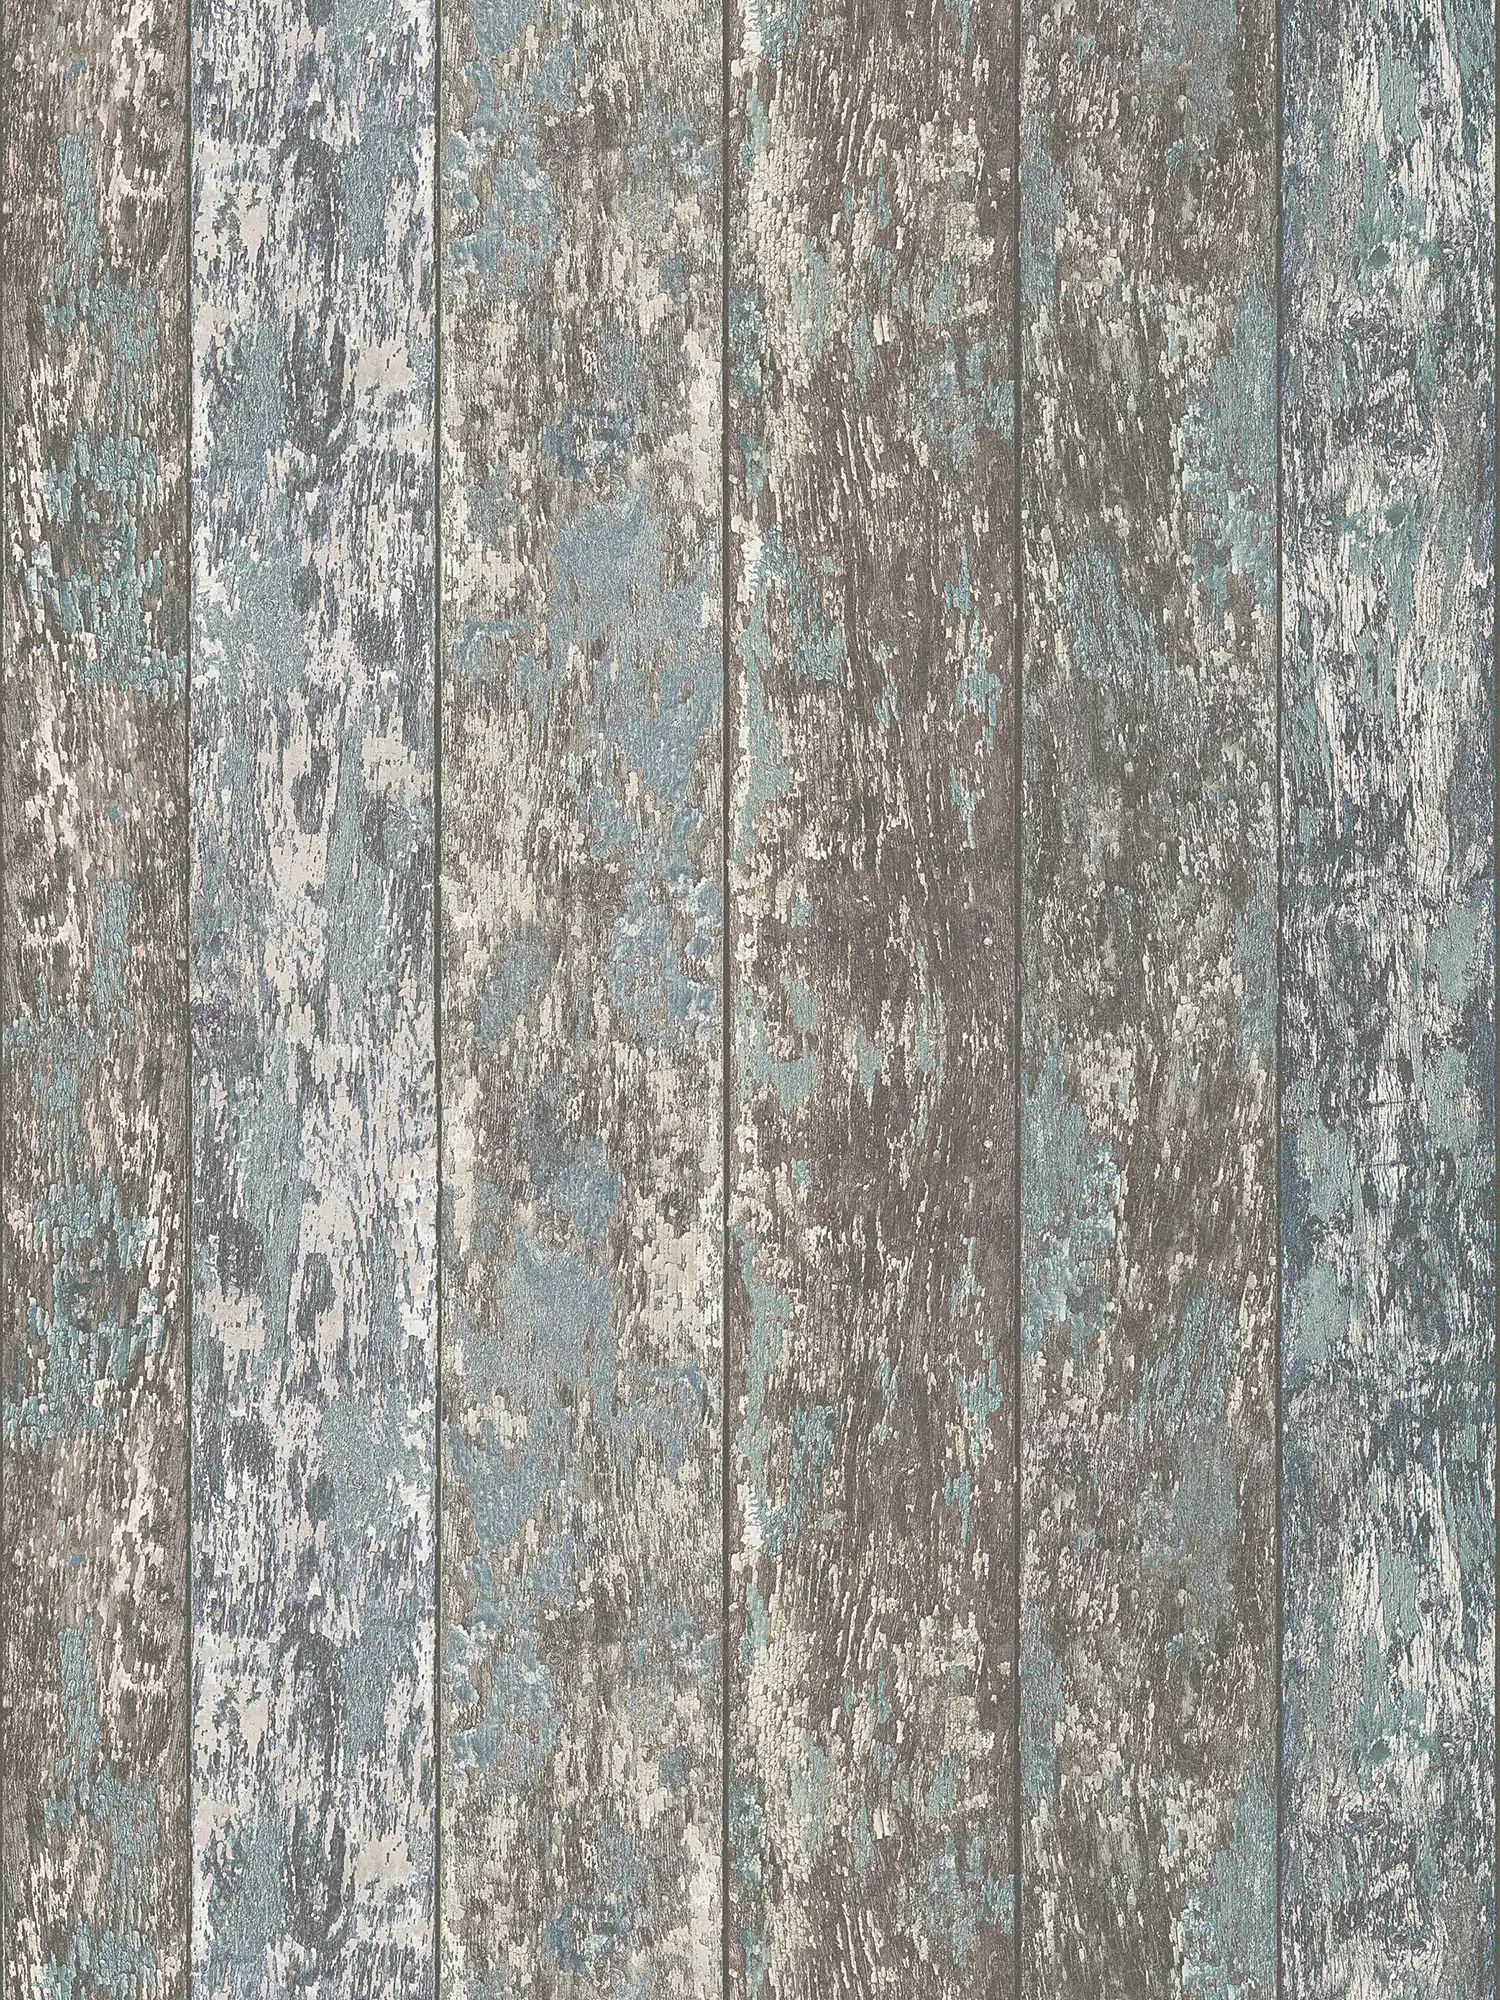 Papel pintado tejido-no tejido efecto madera de aspecto shabby chic usado - azul, marrón, gris
